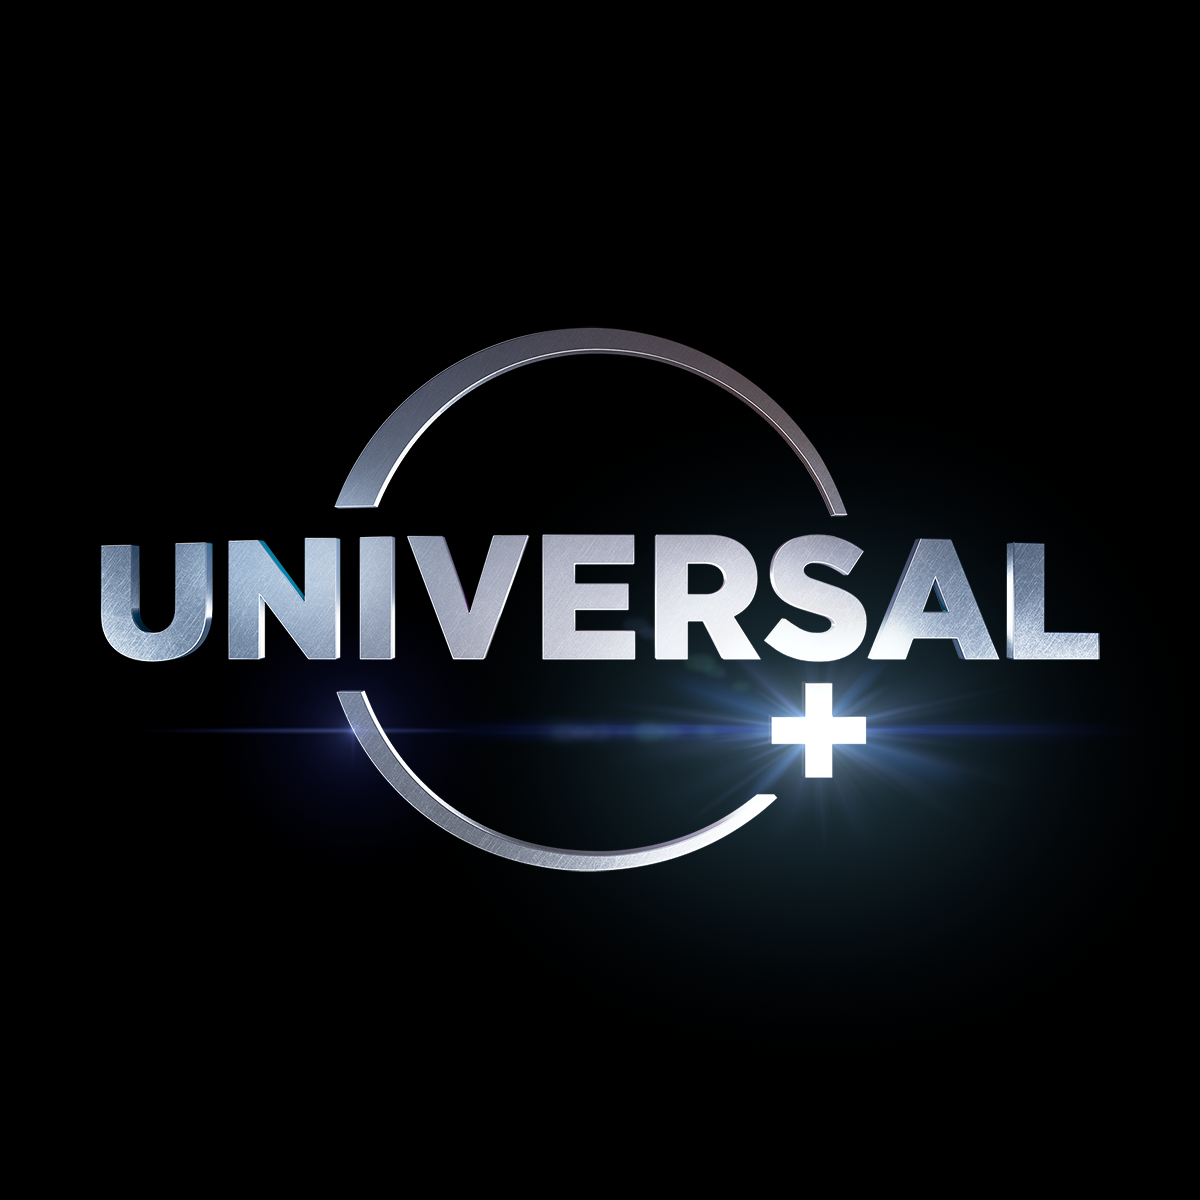 Universal+